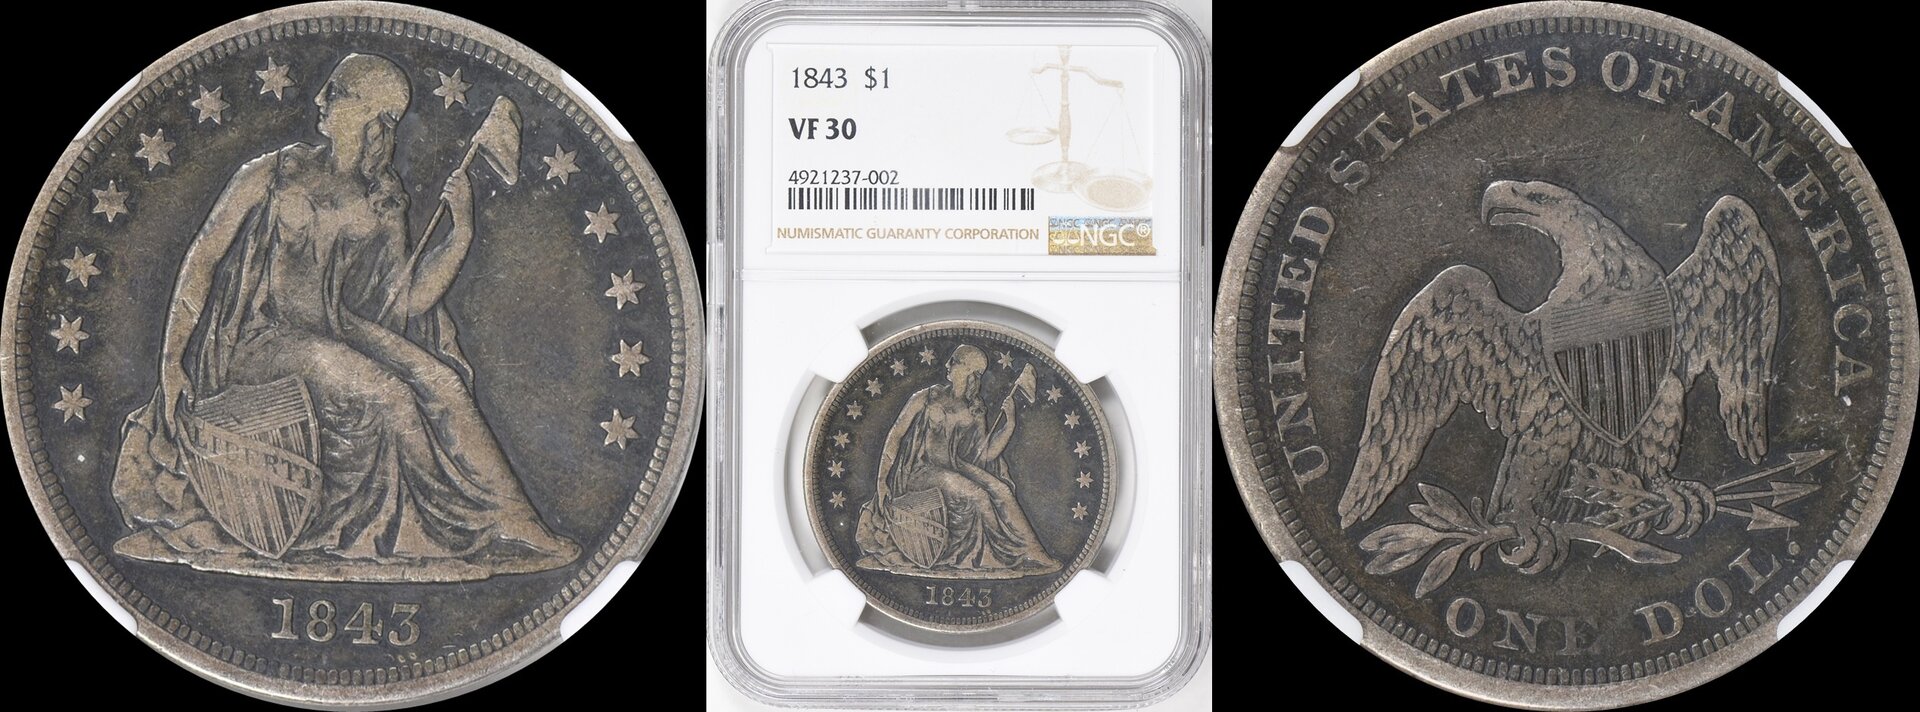 1843 Seated Liberty Silver Dollar NGC VF-30 1a-horz.jpg